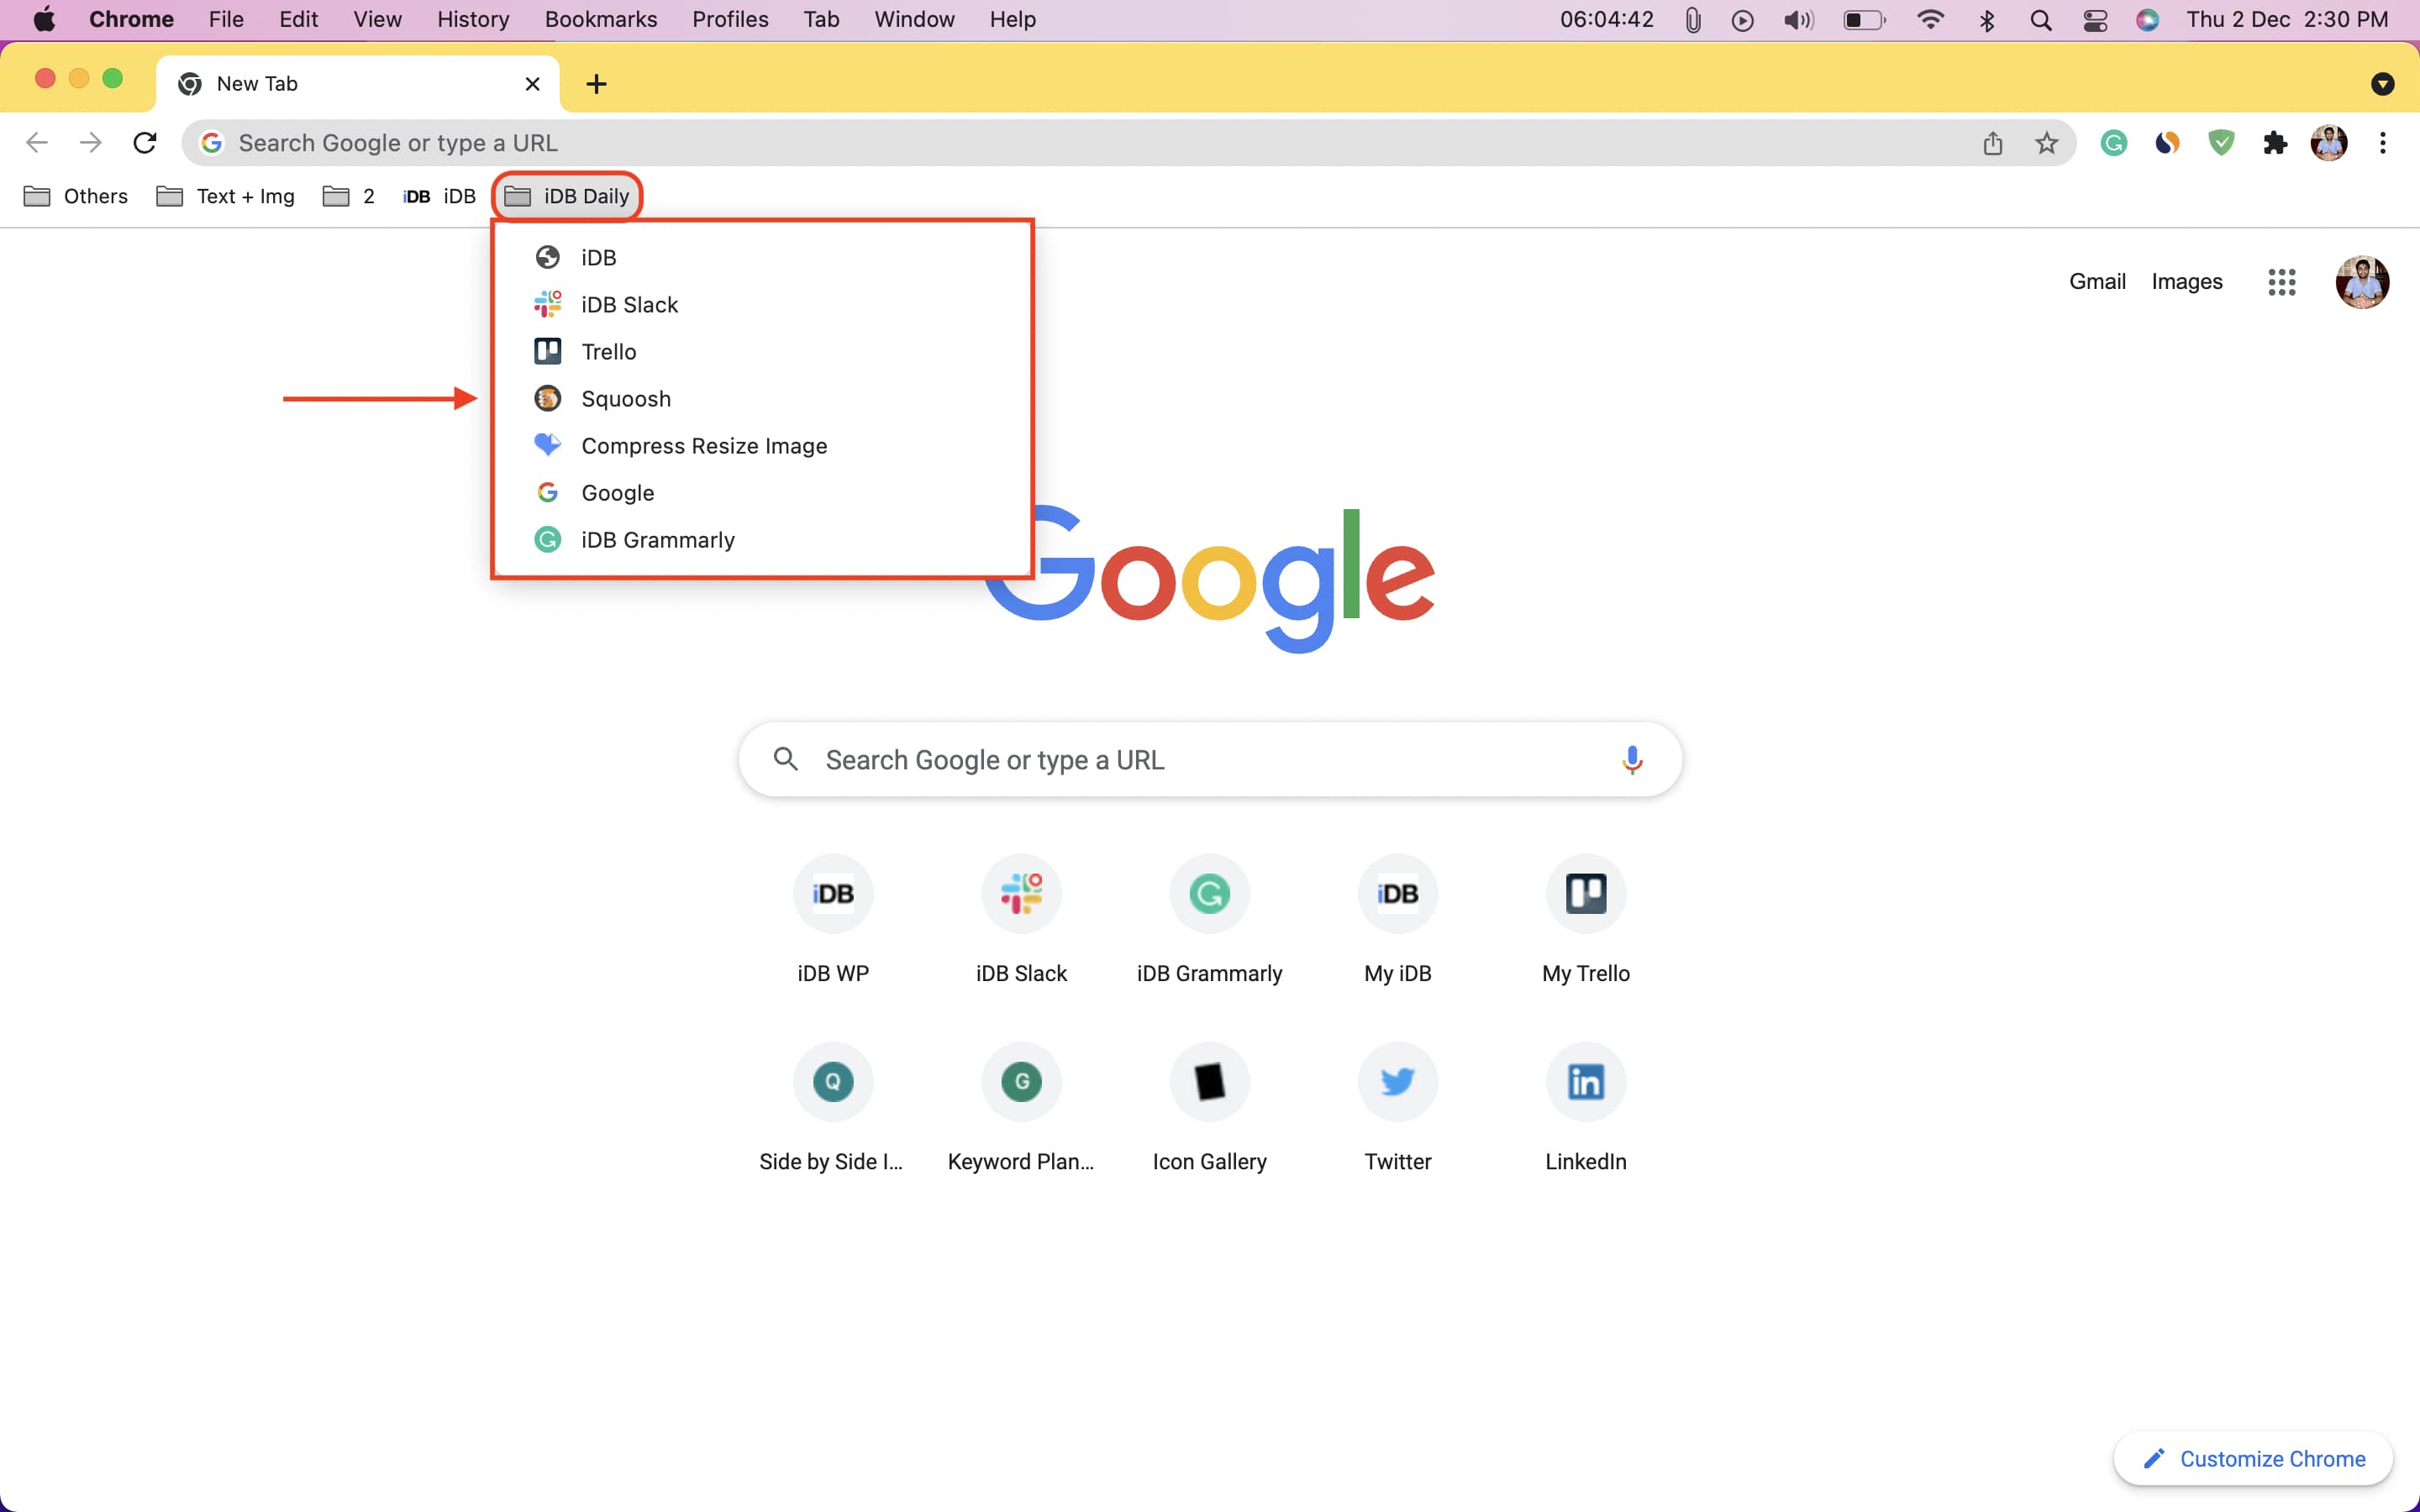 Sites added to Chrome bookmark folder